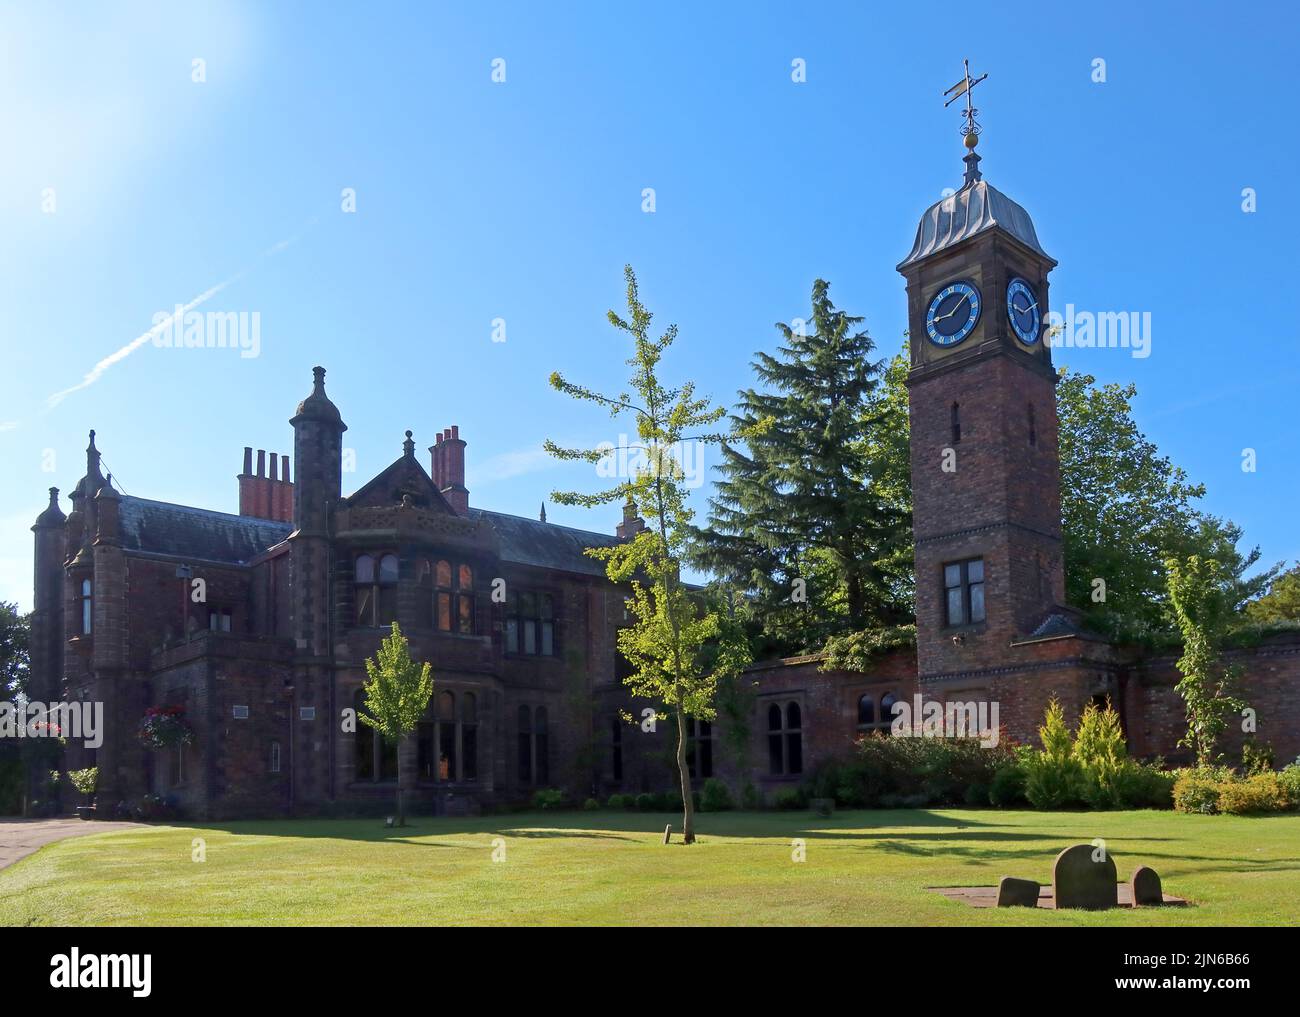 Walton Hall,country house and clocktower, in Walton Gardens park, Warrington, Cheshire,England,UK Stock Photo